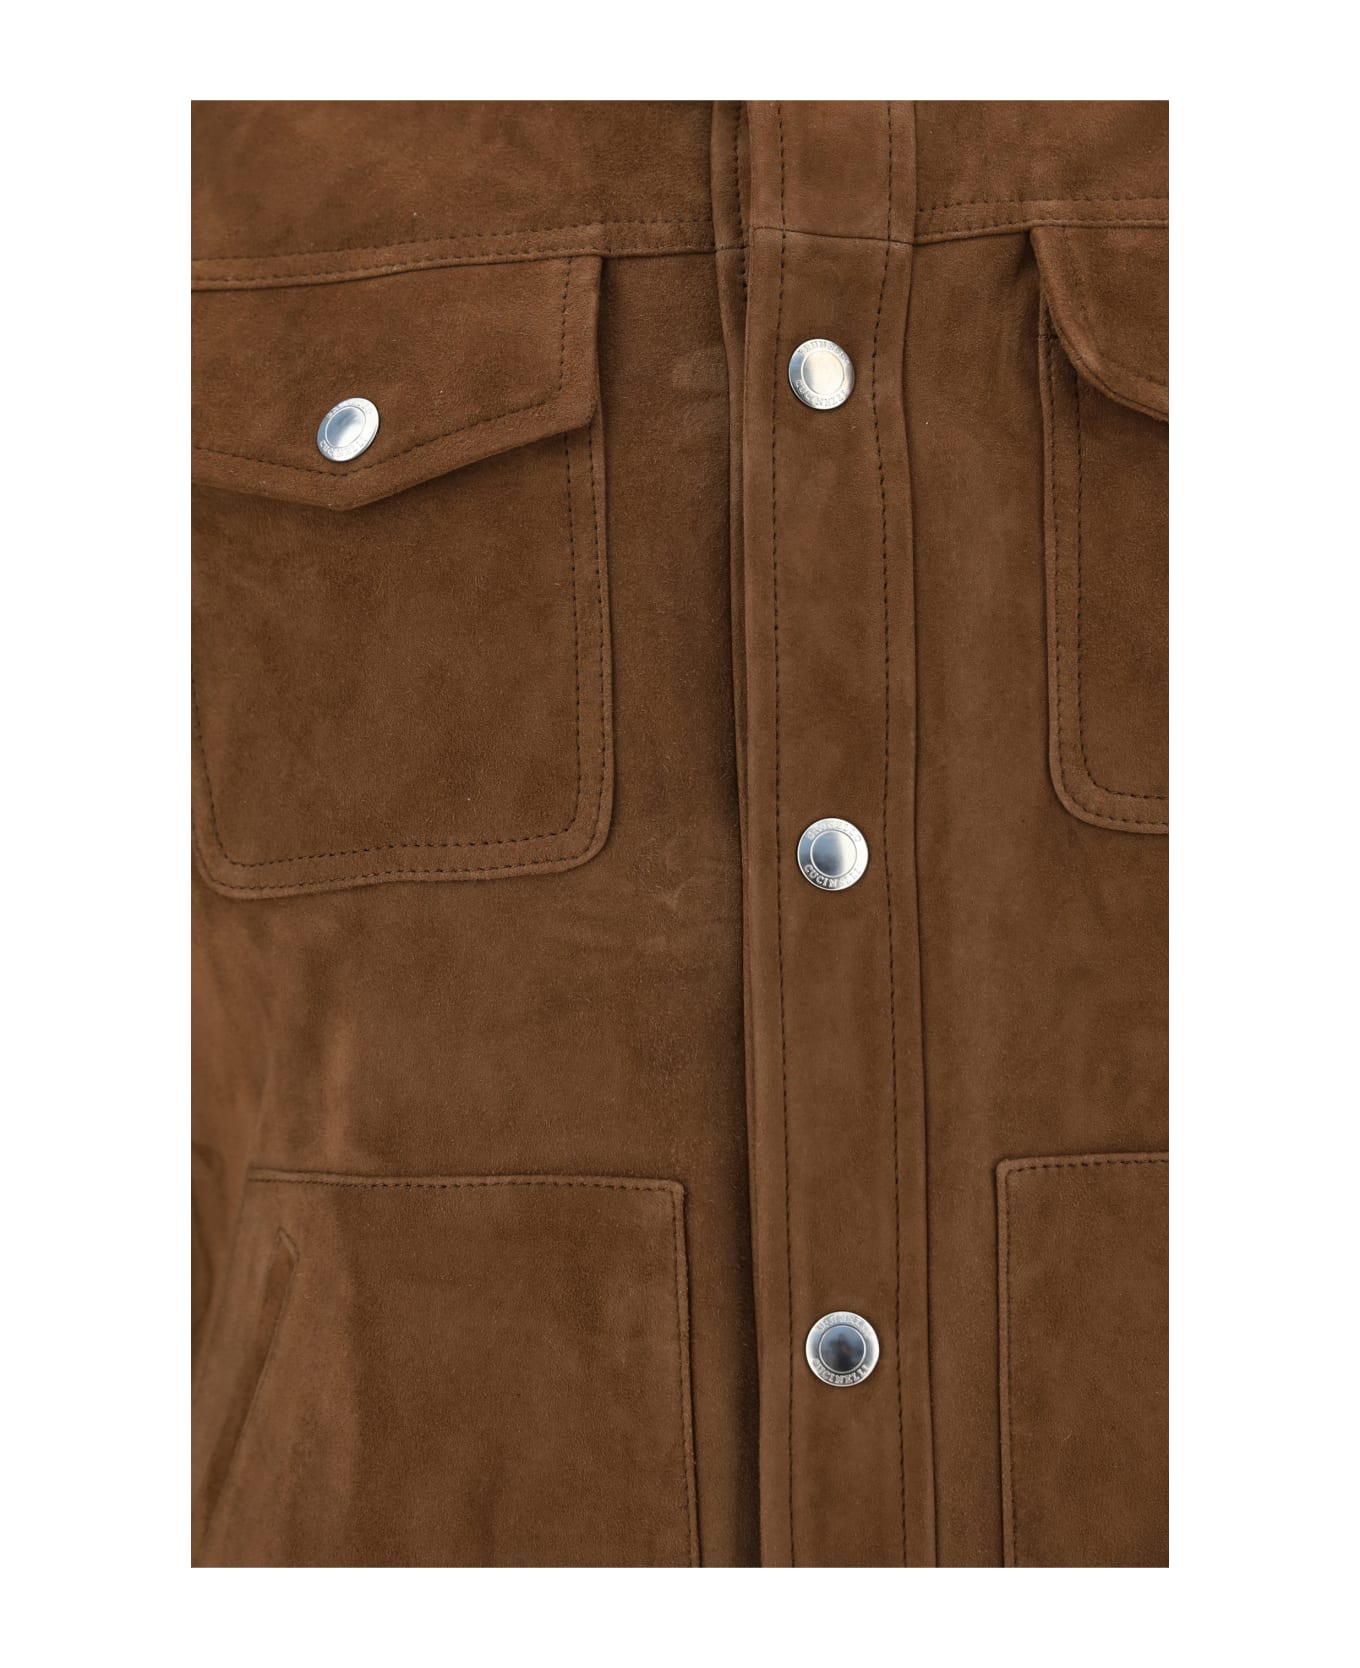 Brunello Cucinelli Leather Jacket - Cci71 レザージャケット